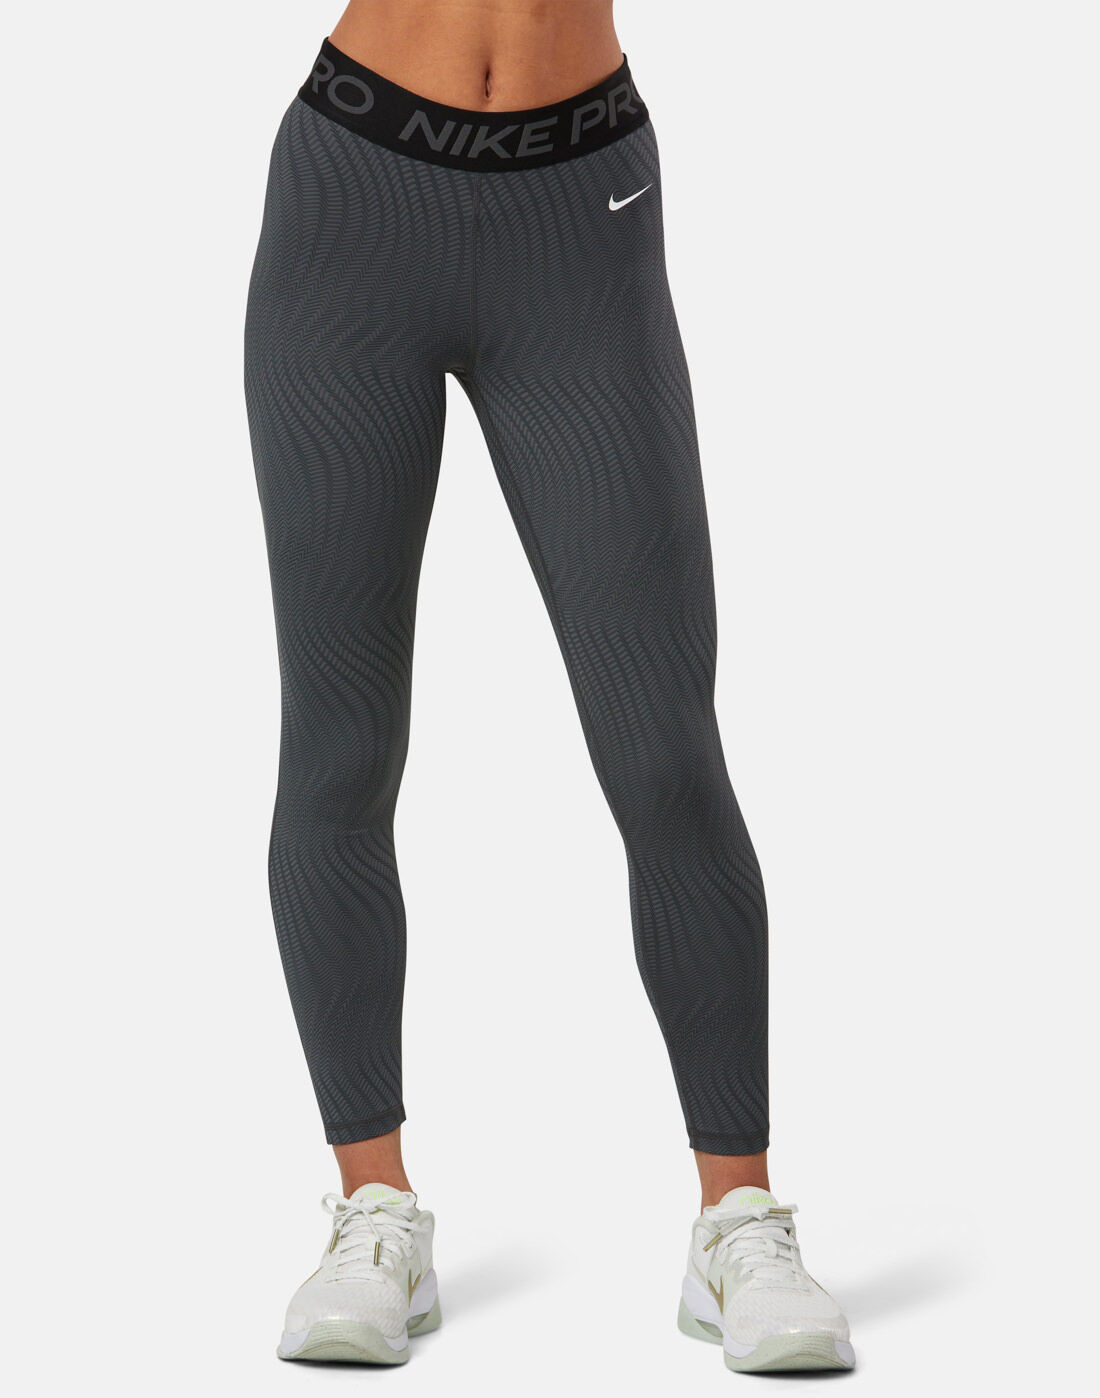 Nike Womens Running Leggings 3/4 Sportswear Gym Bottom Activewear Black S M  L XL | eBay